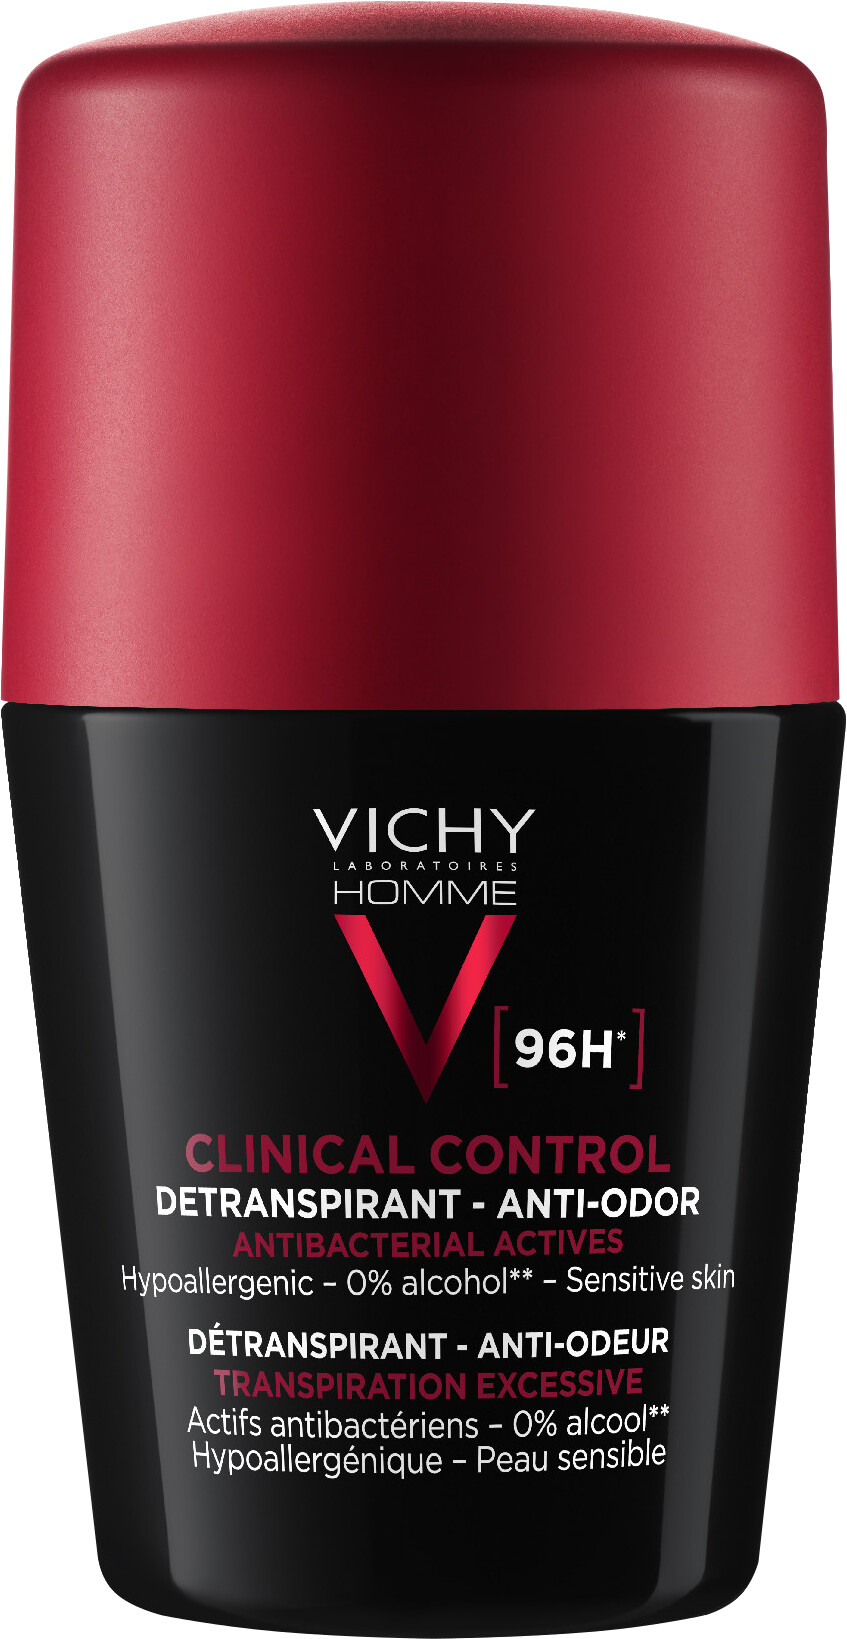 Vichy Homme 96hr Clinical Control Detranspirant Deodorant 50ml